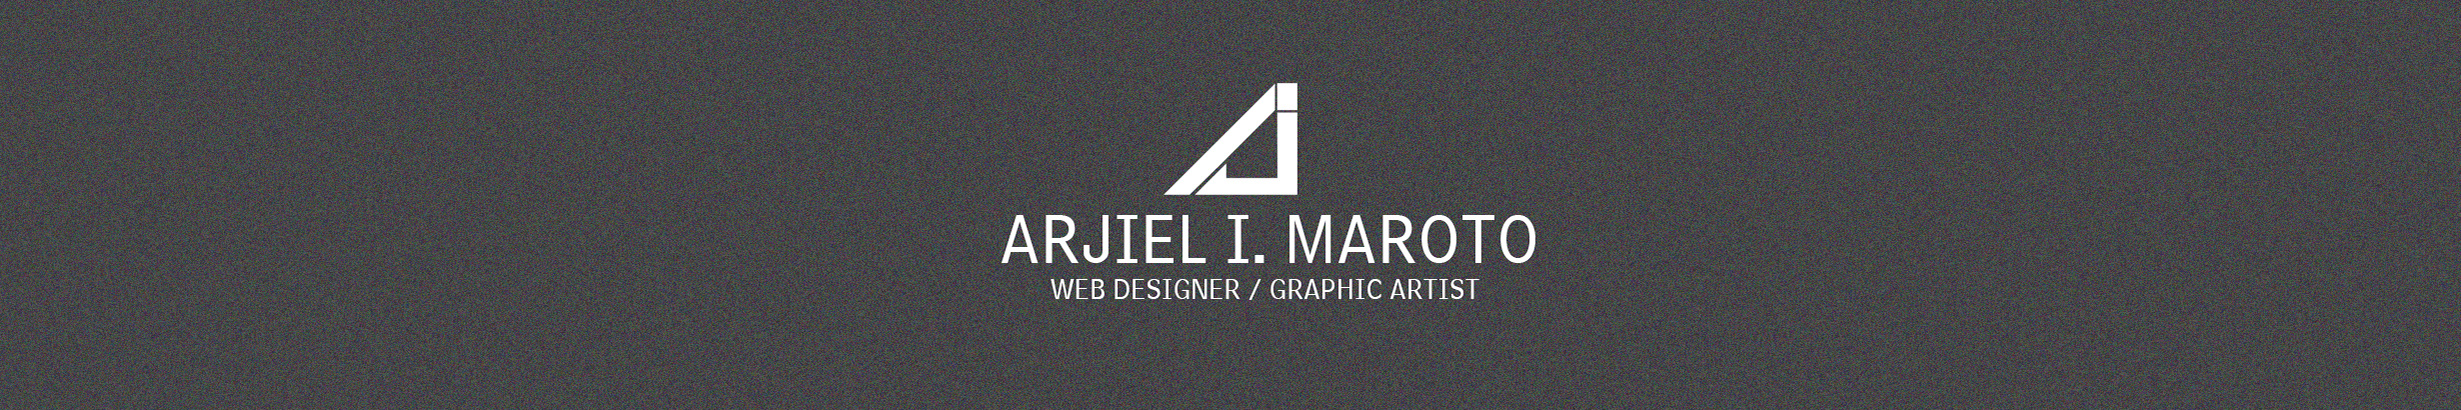 Arjiel Marotos profilbanner